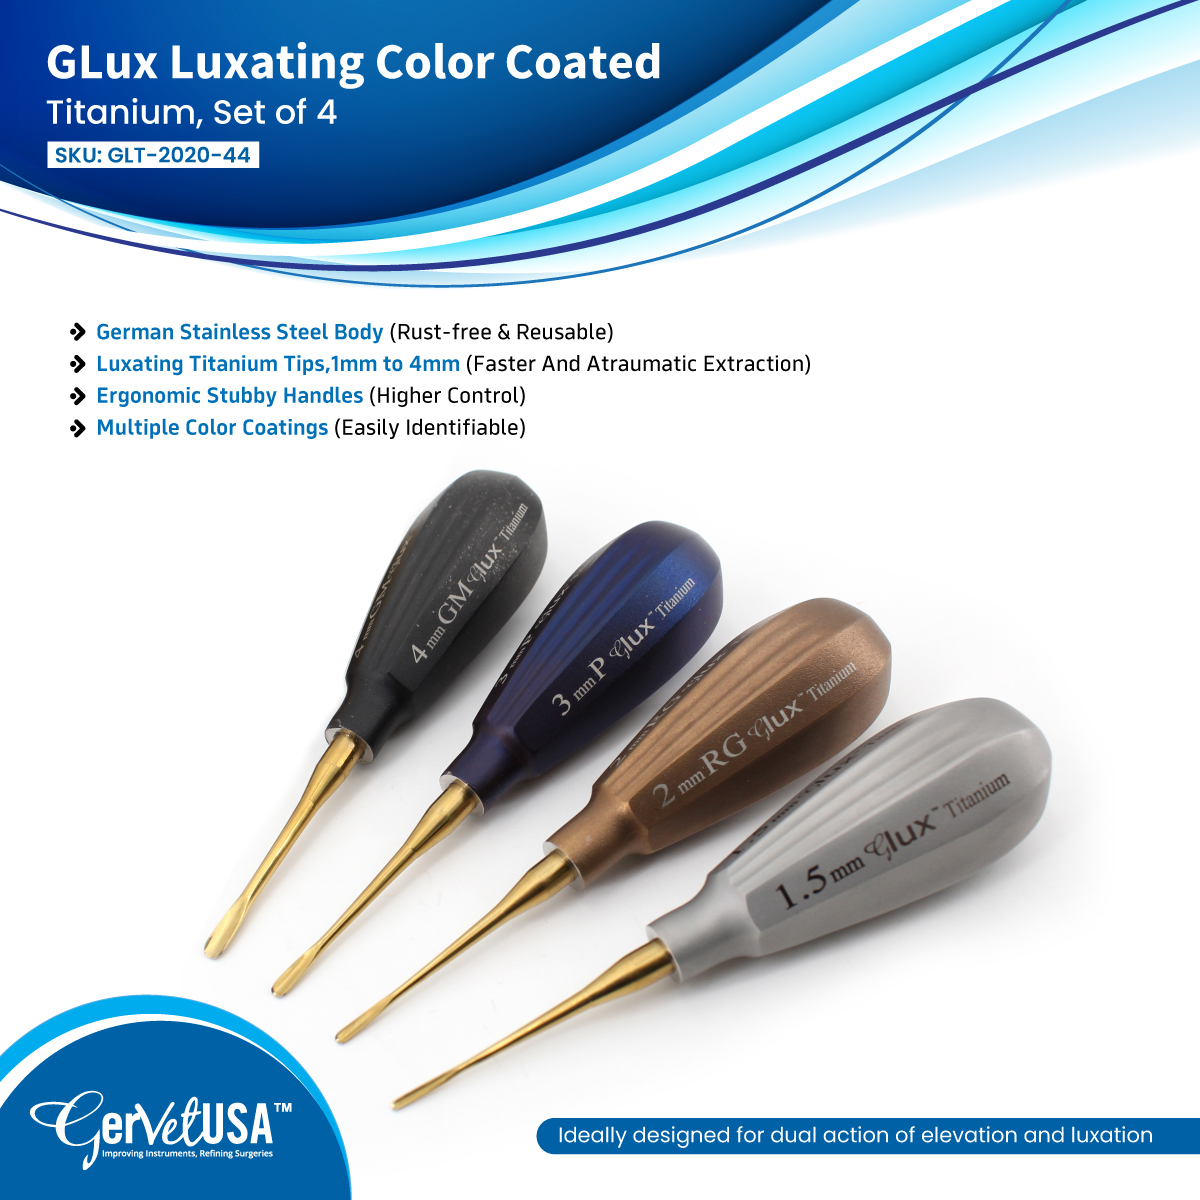 GLux Luxating Color Coated Titanium, Set of 4